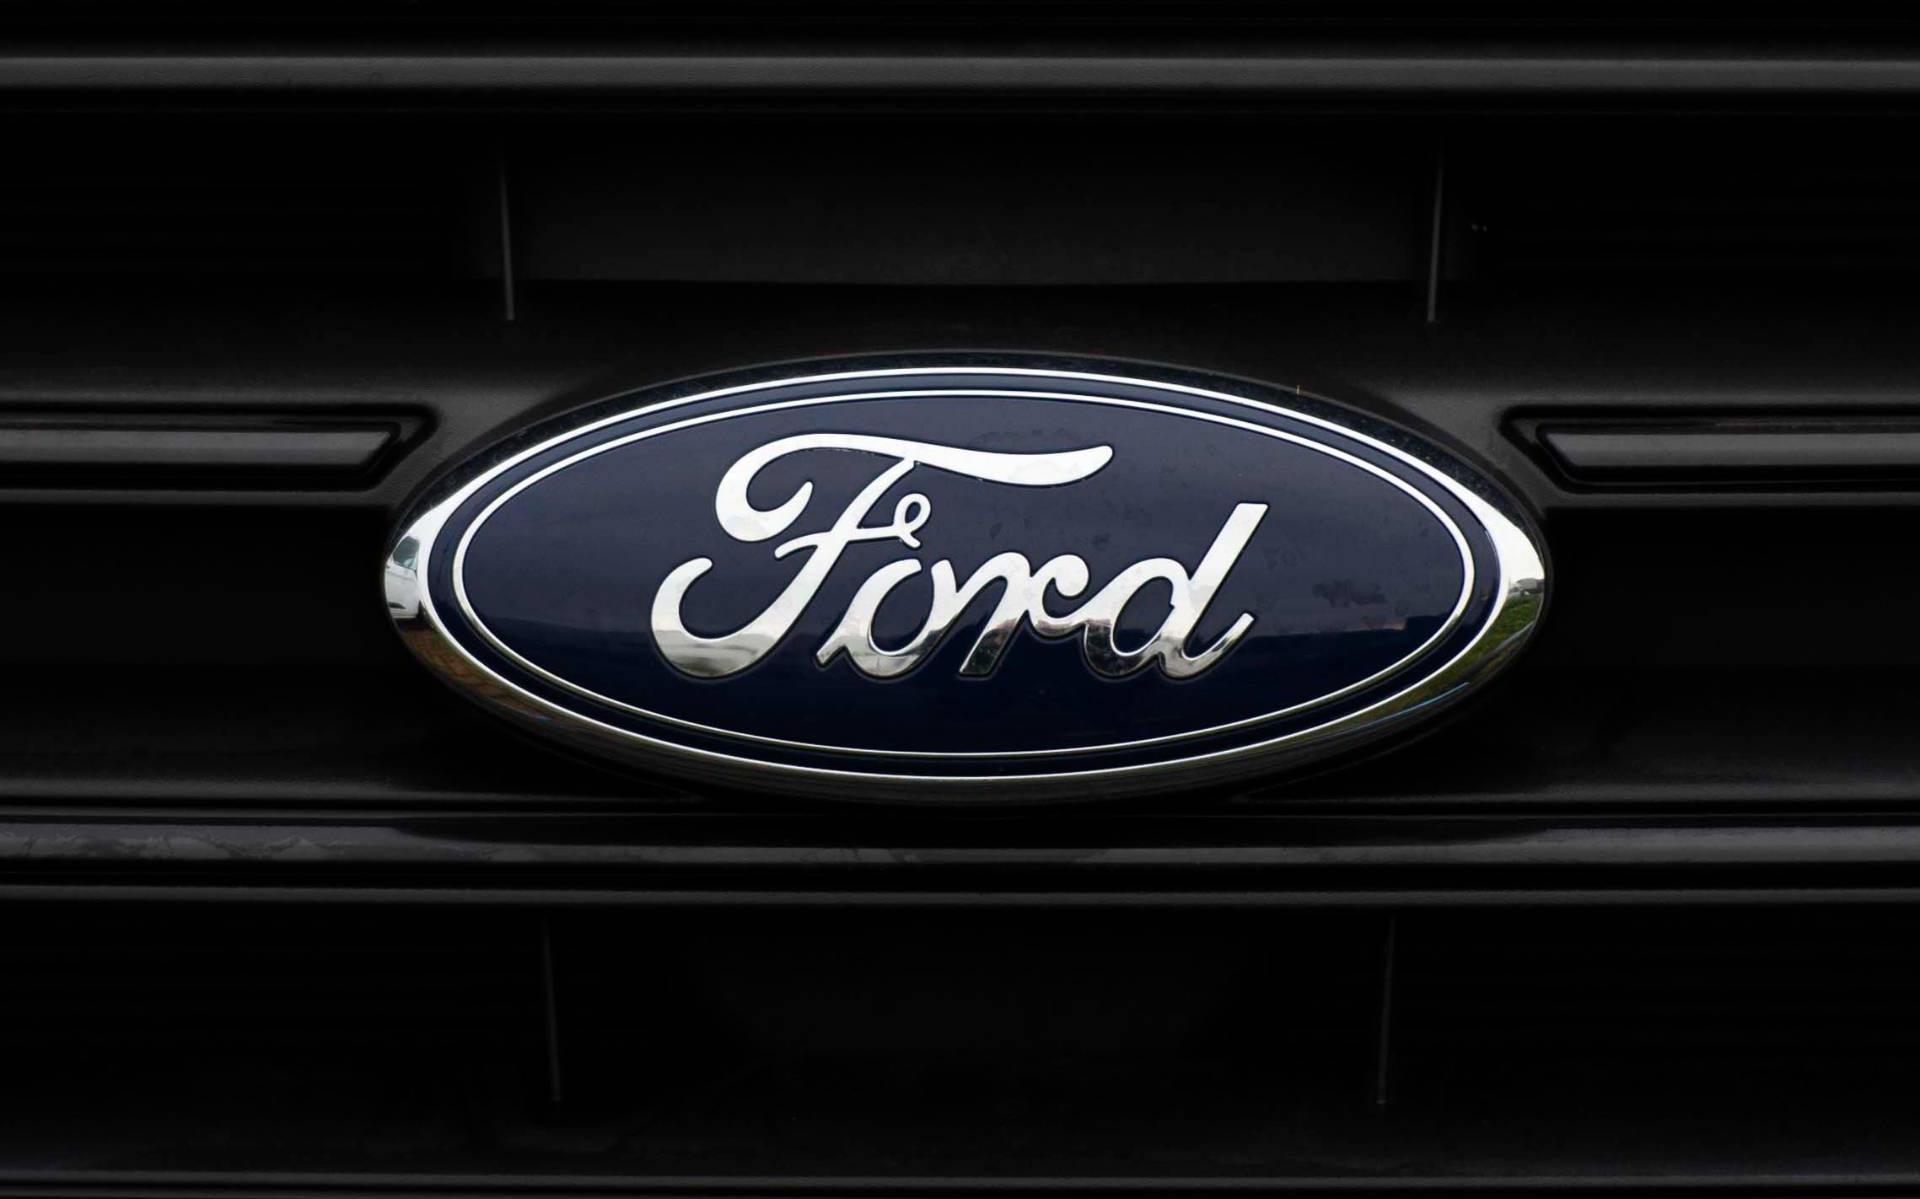 Ford voert winst flink op ondanks malaise in autobranche